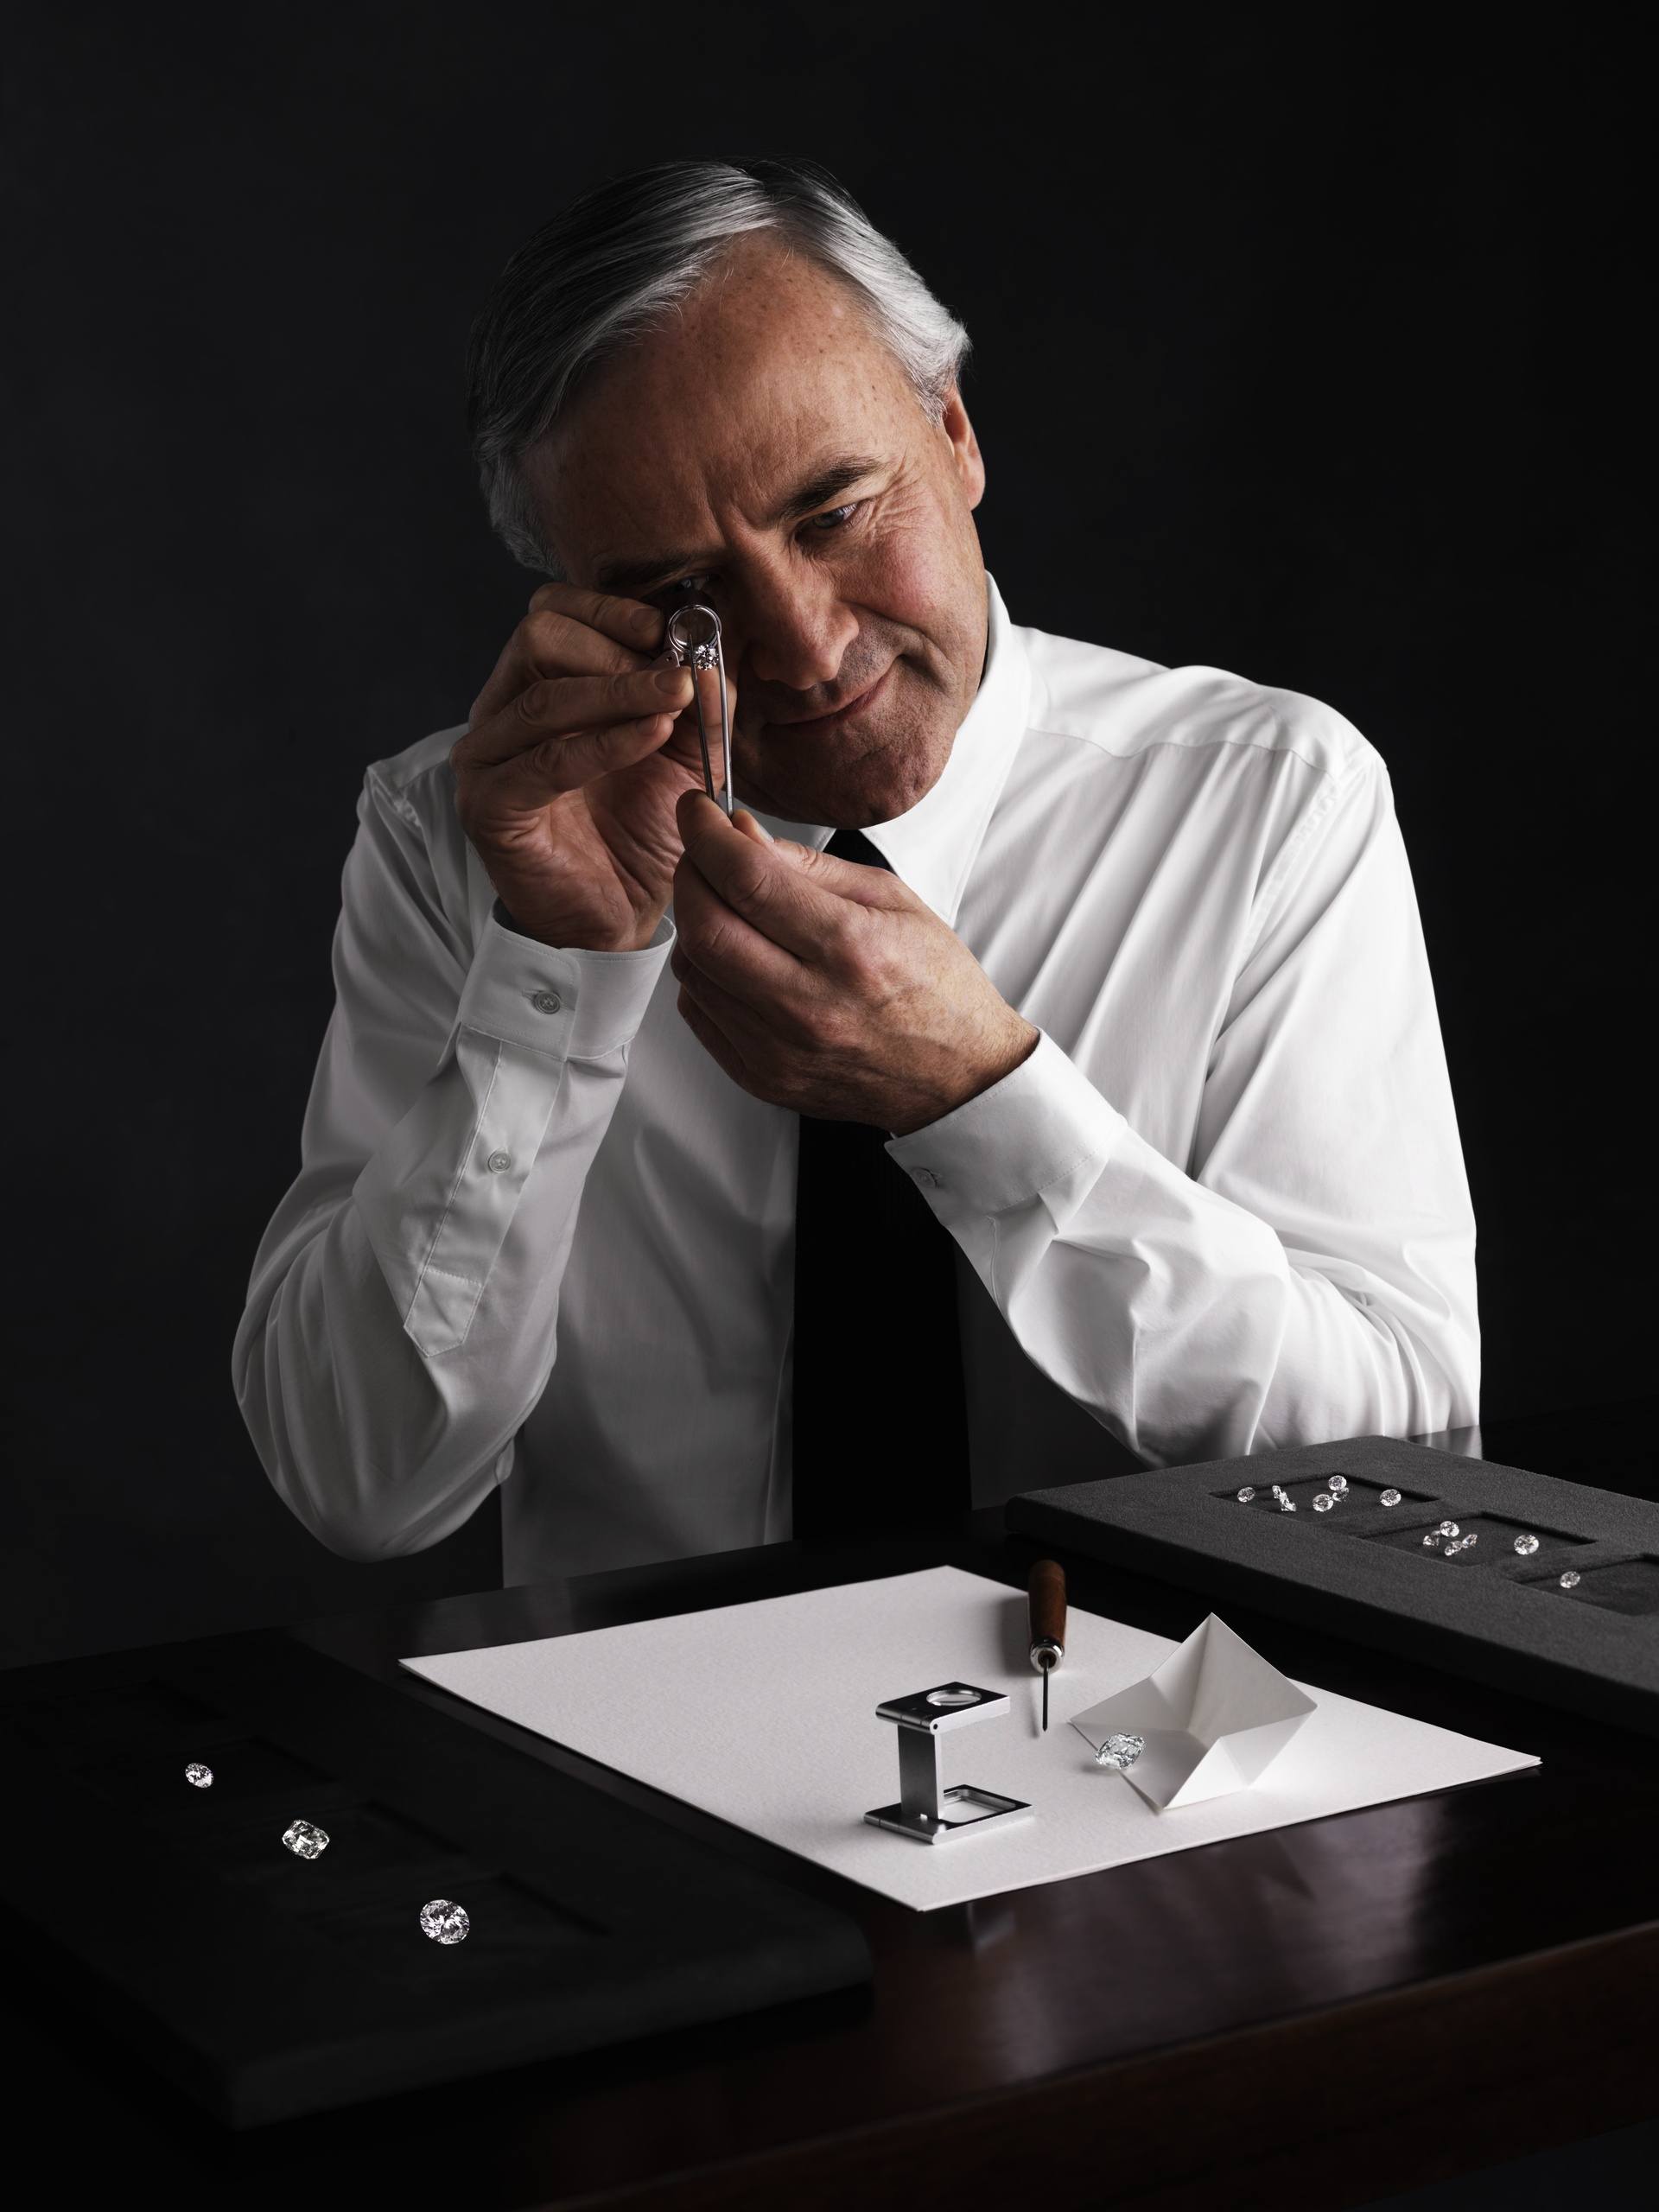 Profile image of Executive Vice President of De Beers Jewellers Andrew Coxon